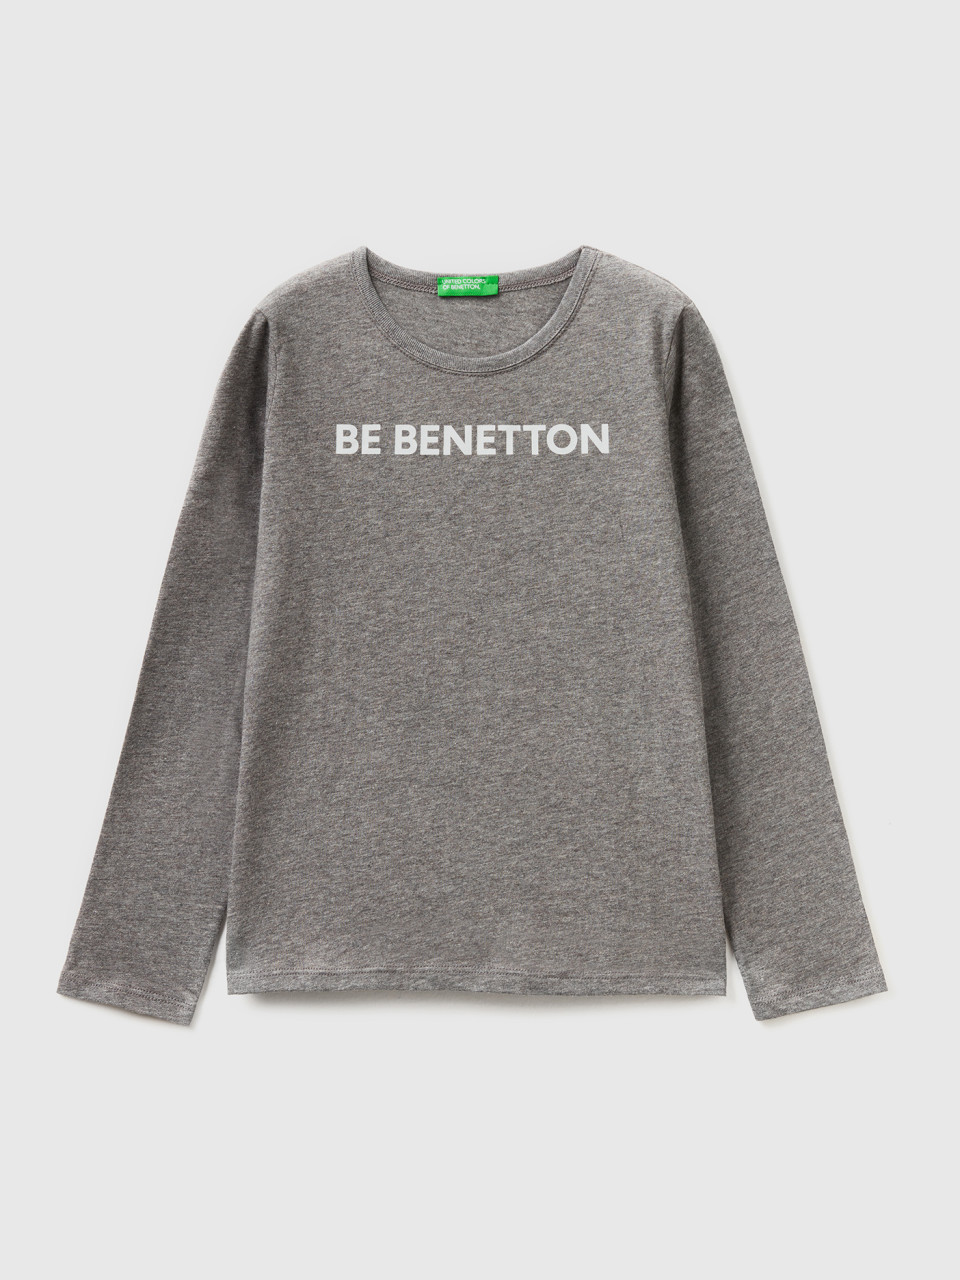 Benetton, Long Sleeve 100% Cotton T-shirt, Dark Gray, Kids